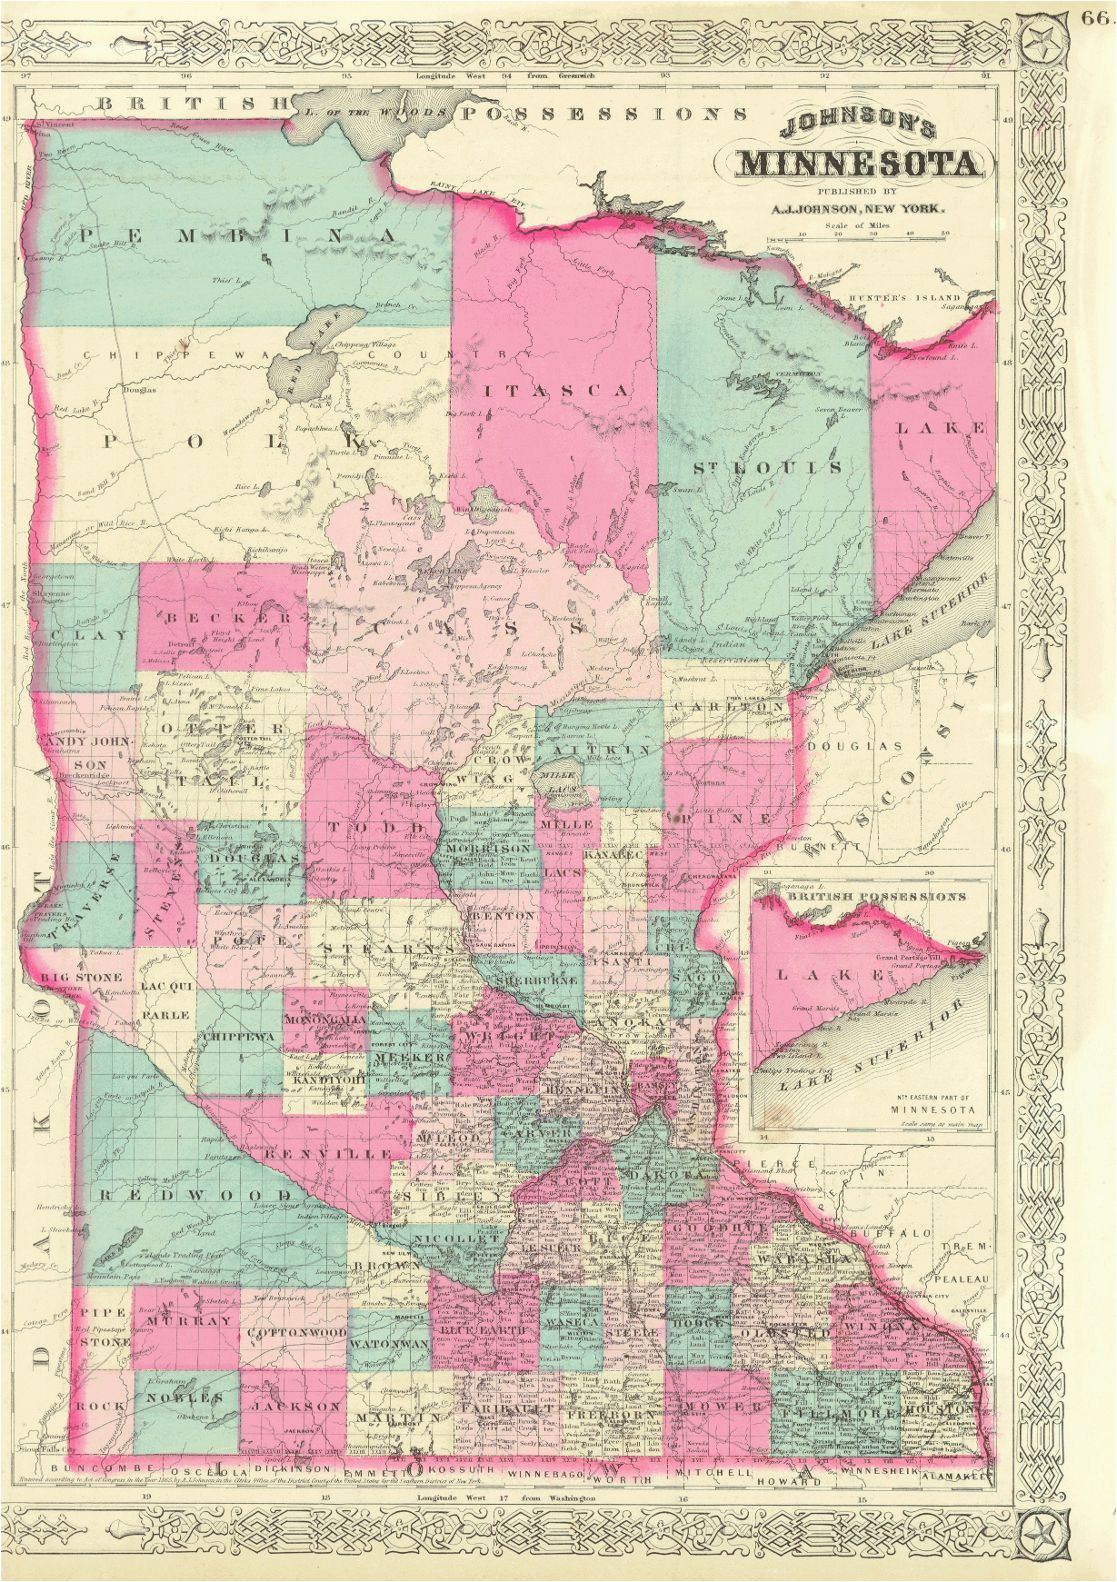 1852 mitchell minnesota territory map before north or south dakota